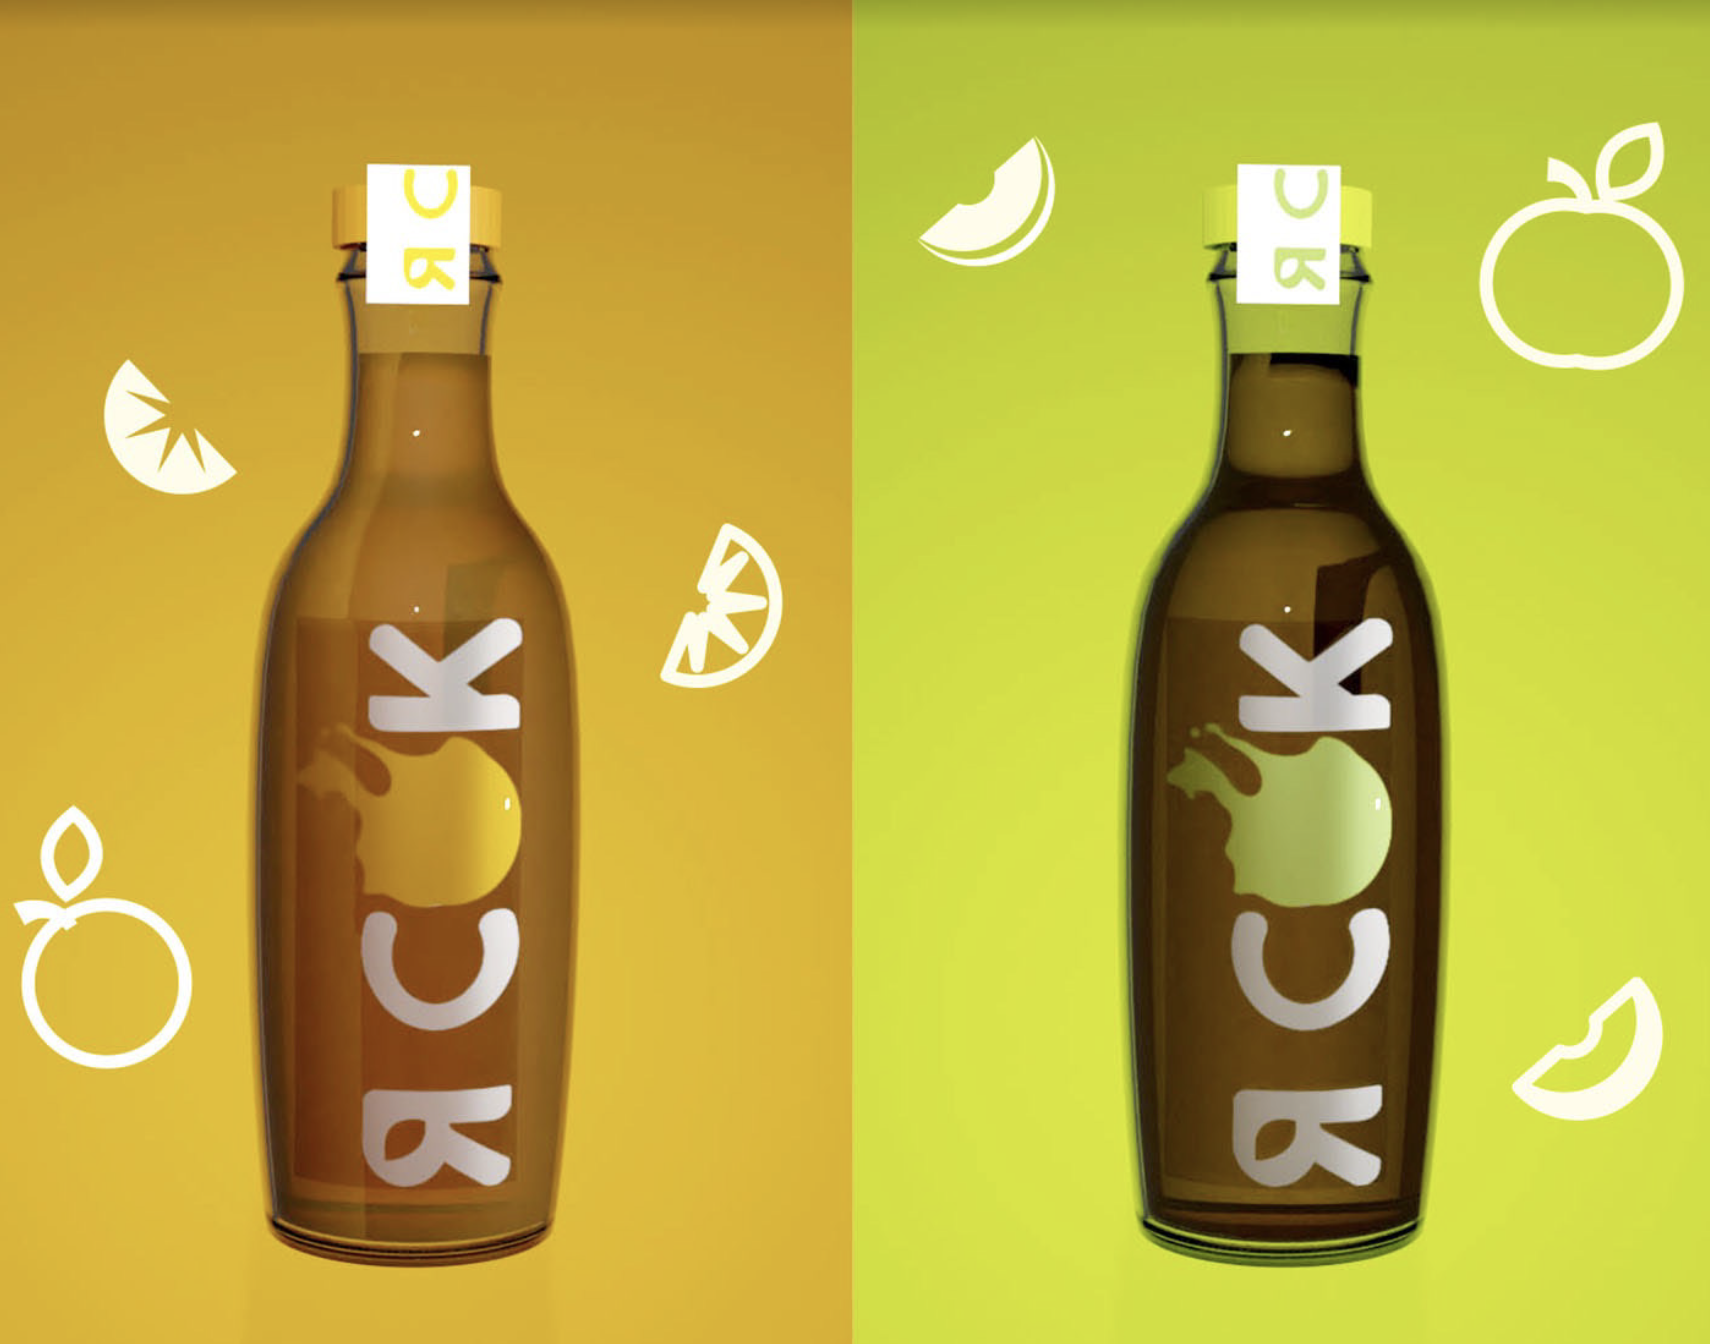 PRINTABLE Bottle Cozy Template downloadable PDF. DIY Packaging for Beer  Bottle Cozies. Bottle Cosy Labels. Modern Design. 